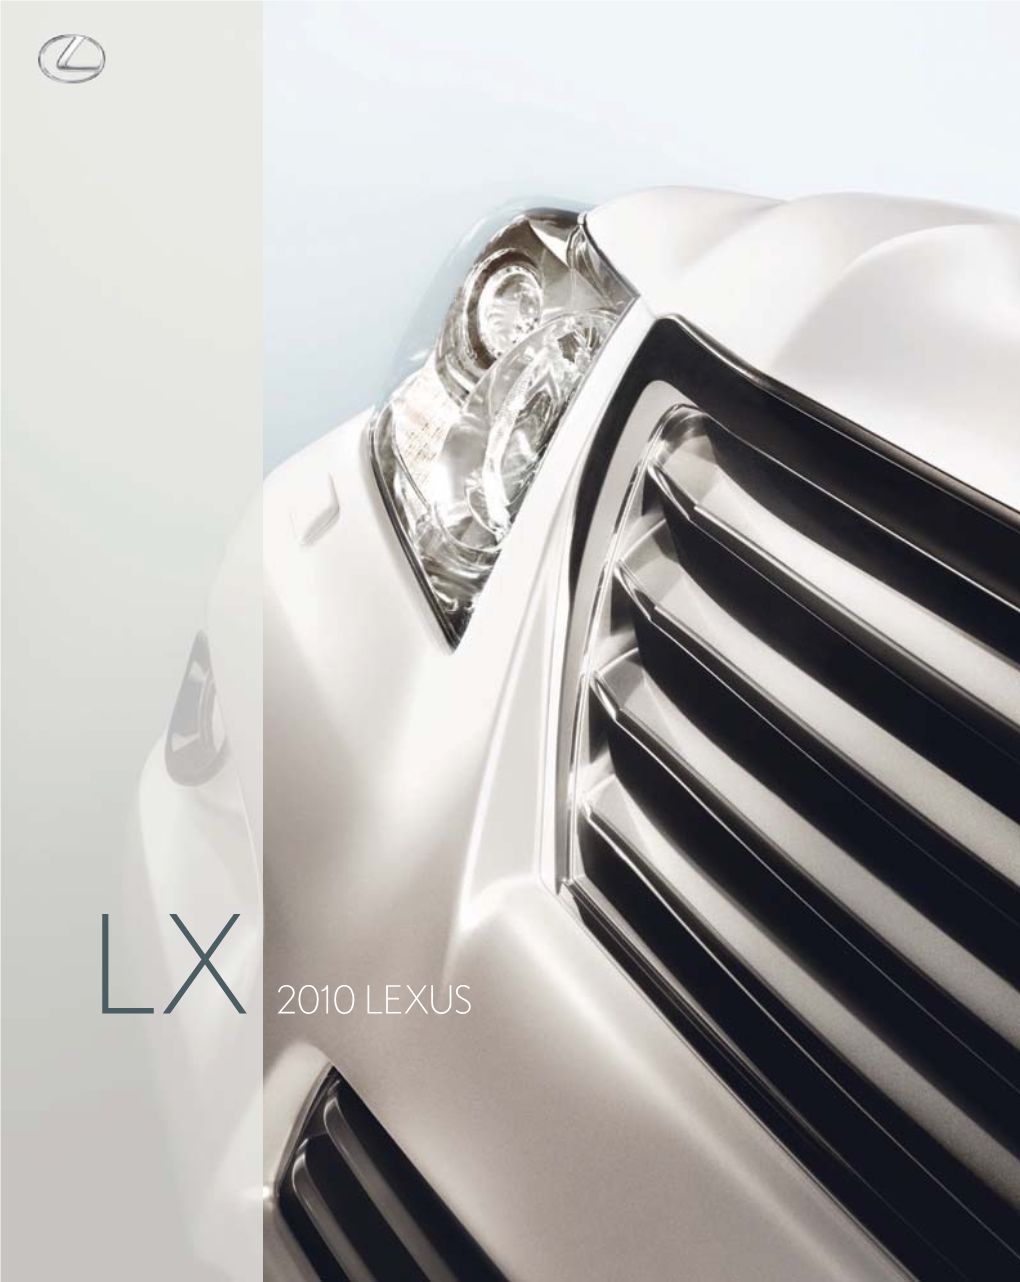 Lx2010 Lexus